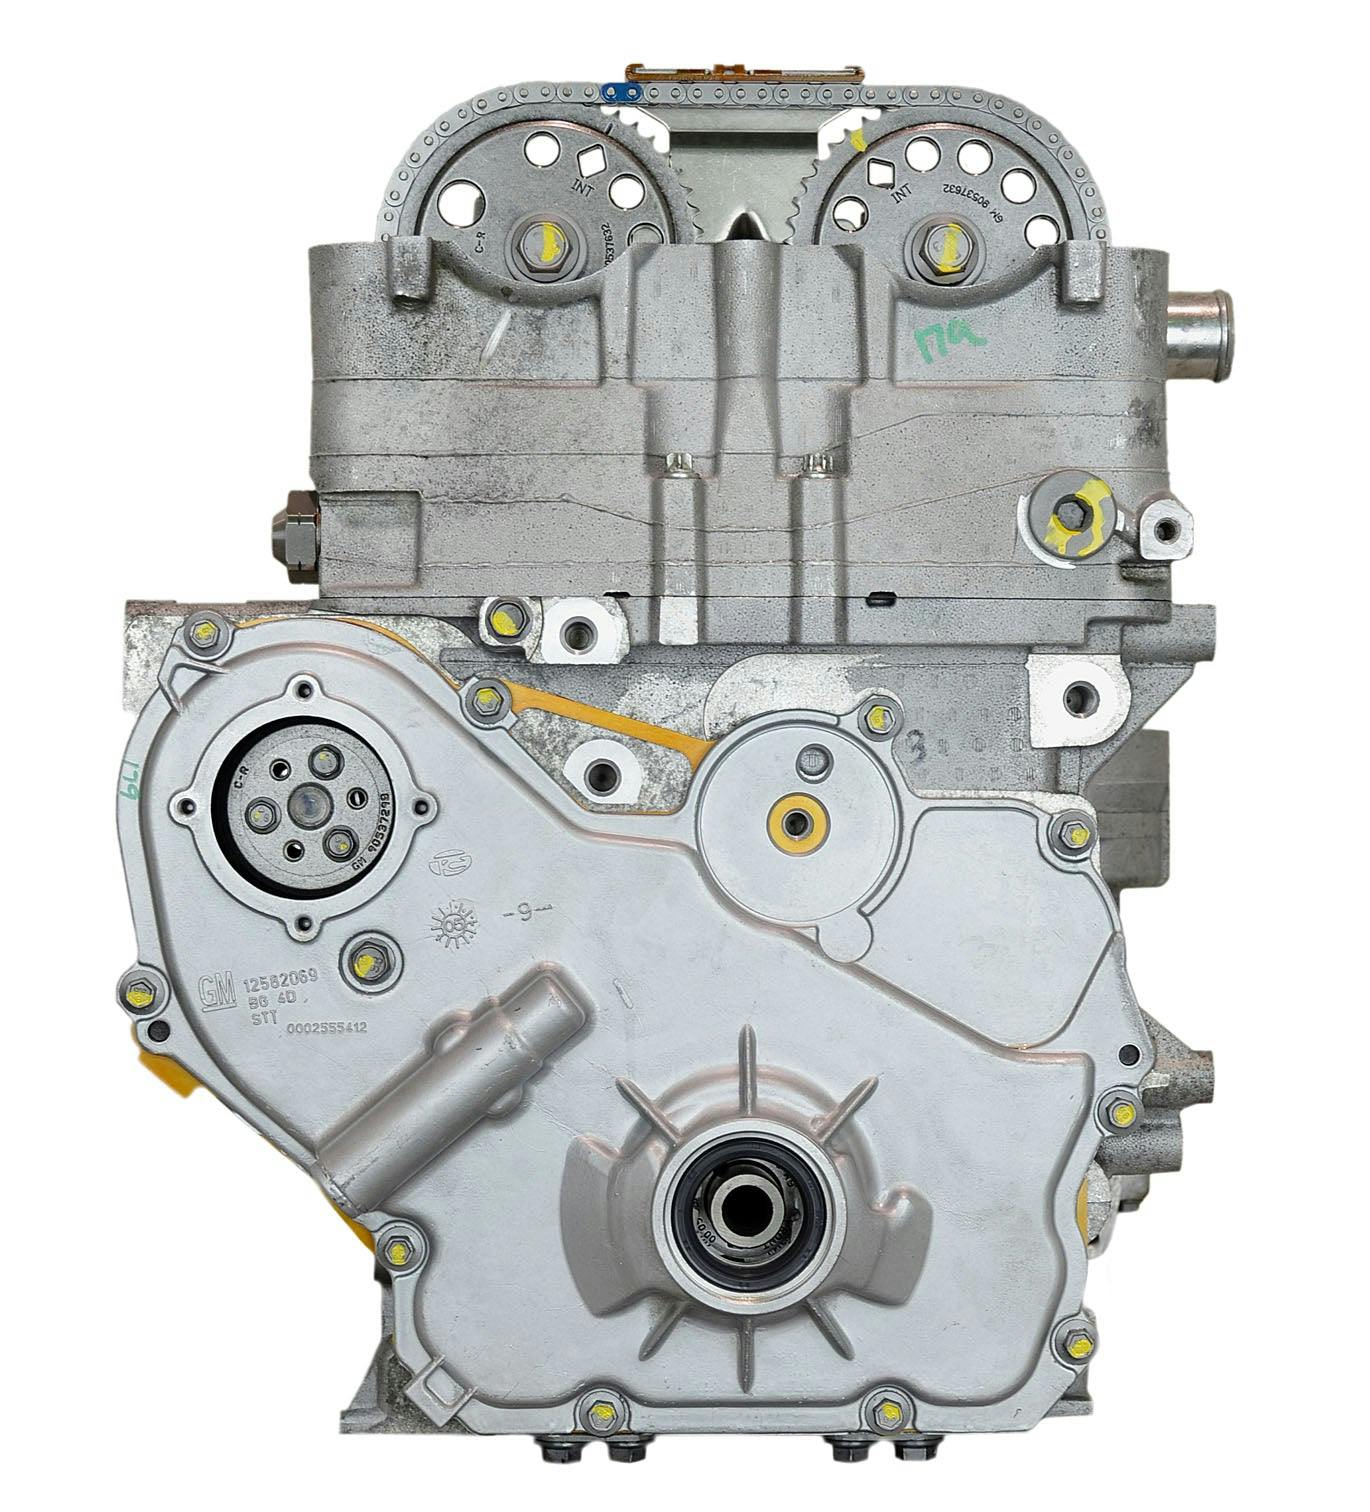 2.2L Inline-4 Engine for 2002-2007 Chevrolet Cobalt, HHR, Malibu/Pontiac Pursuit/Saturn Ion, Vue